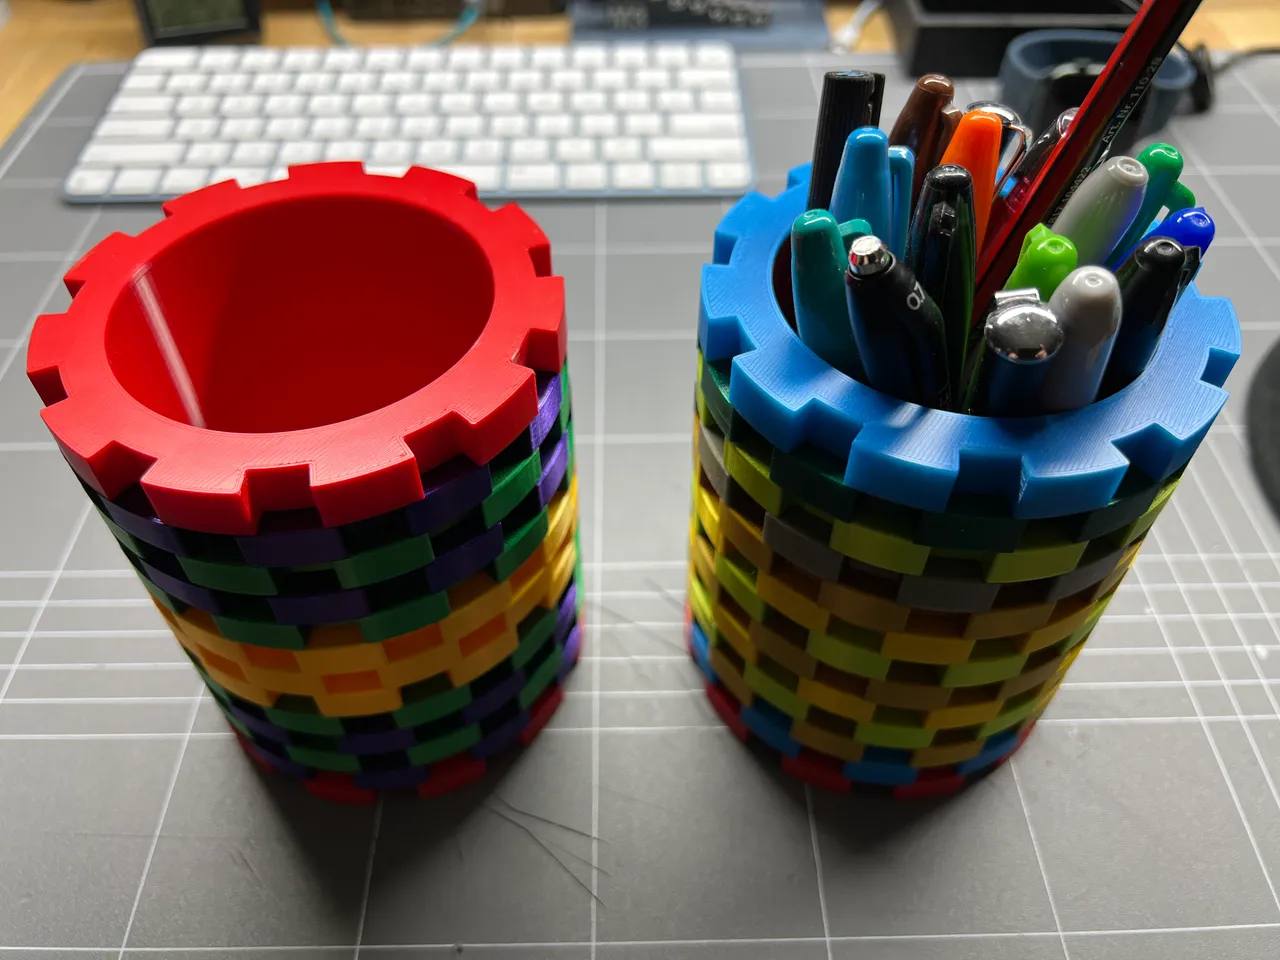 DIY LEGO Pencil Holder